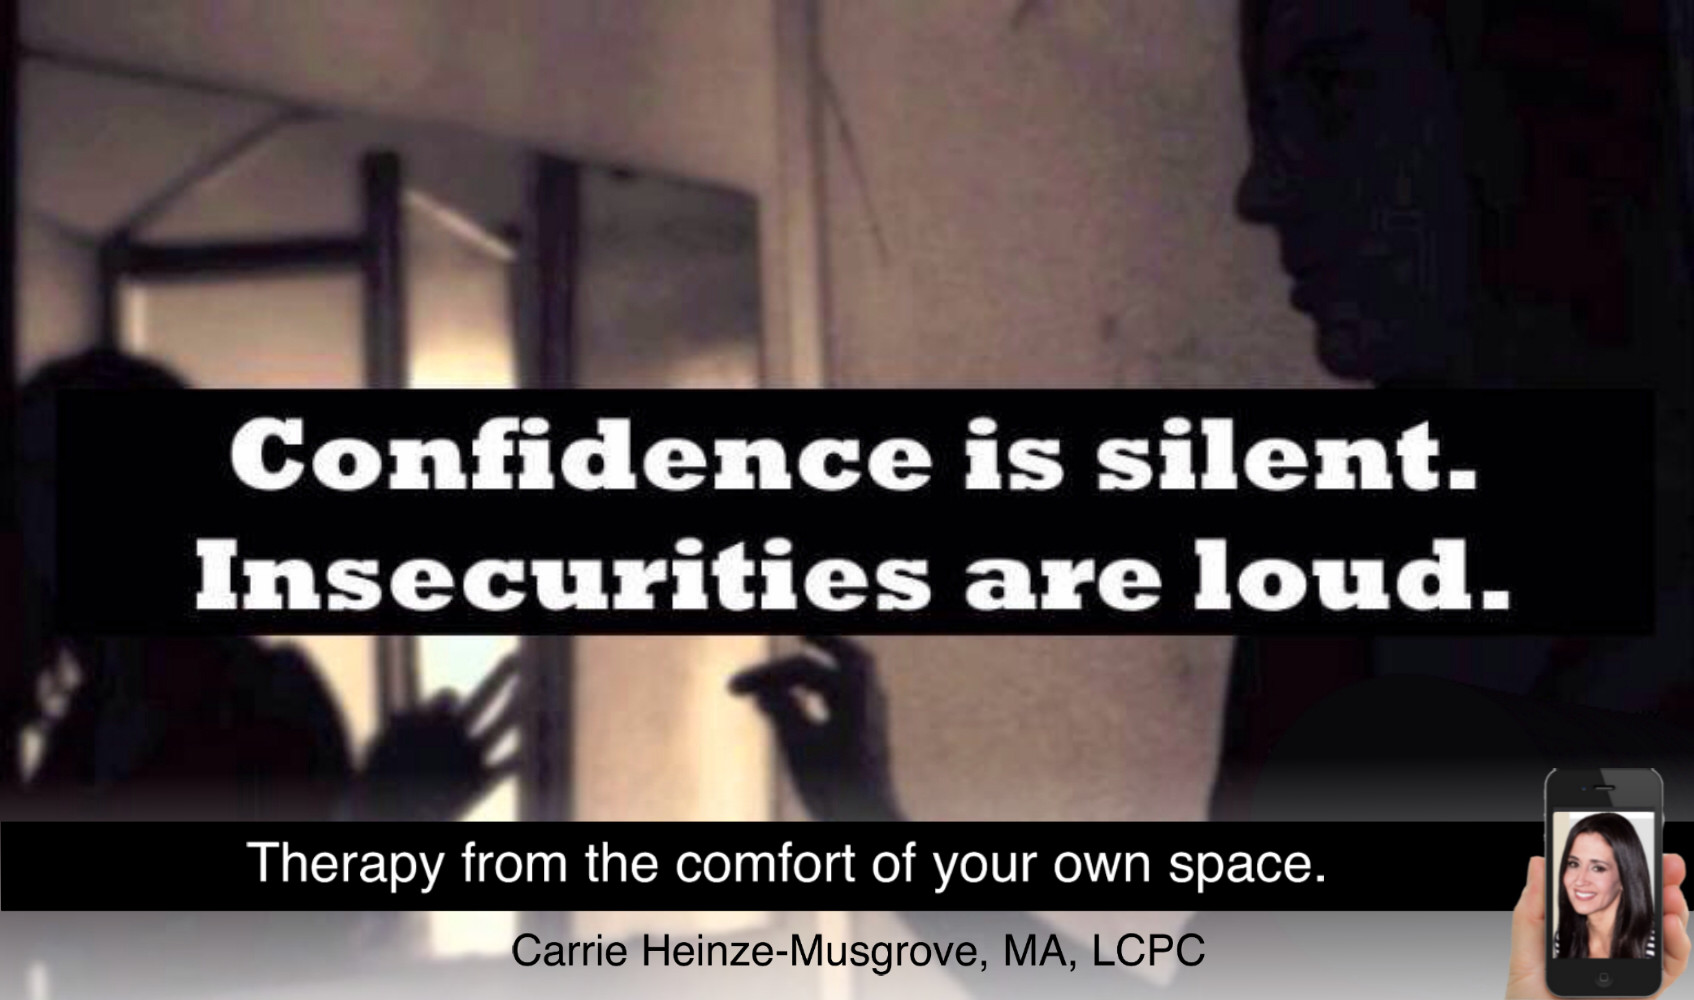 Dear Insecurity,